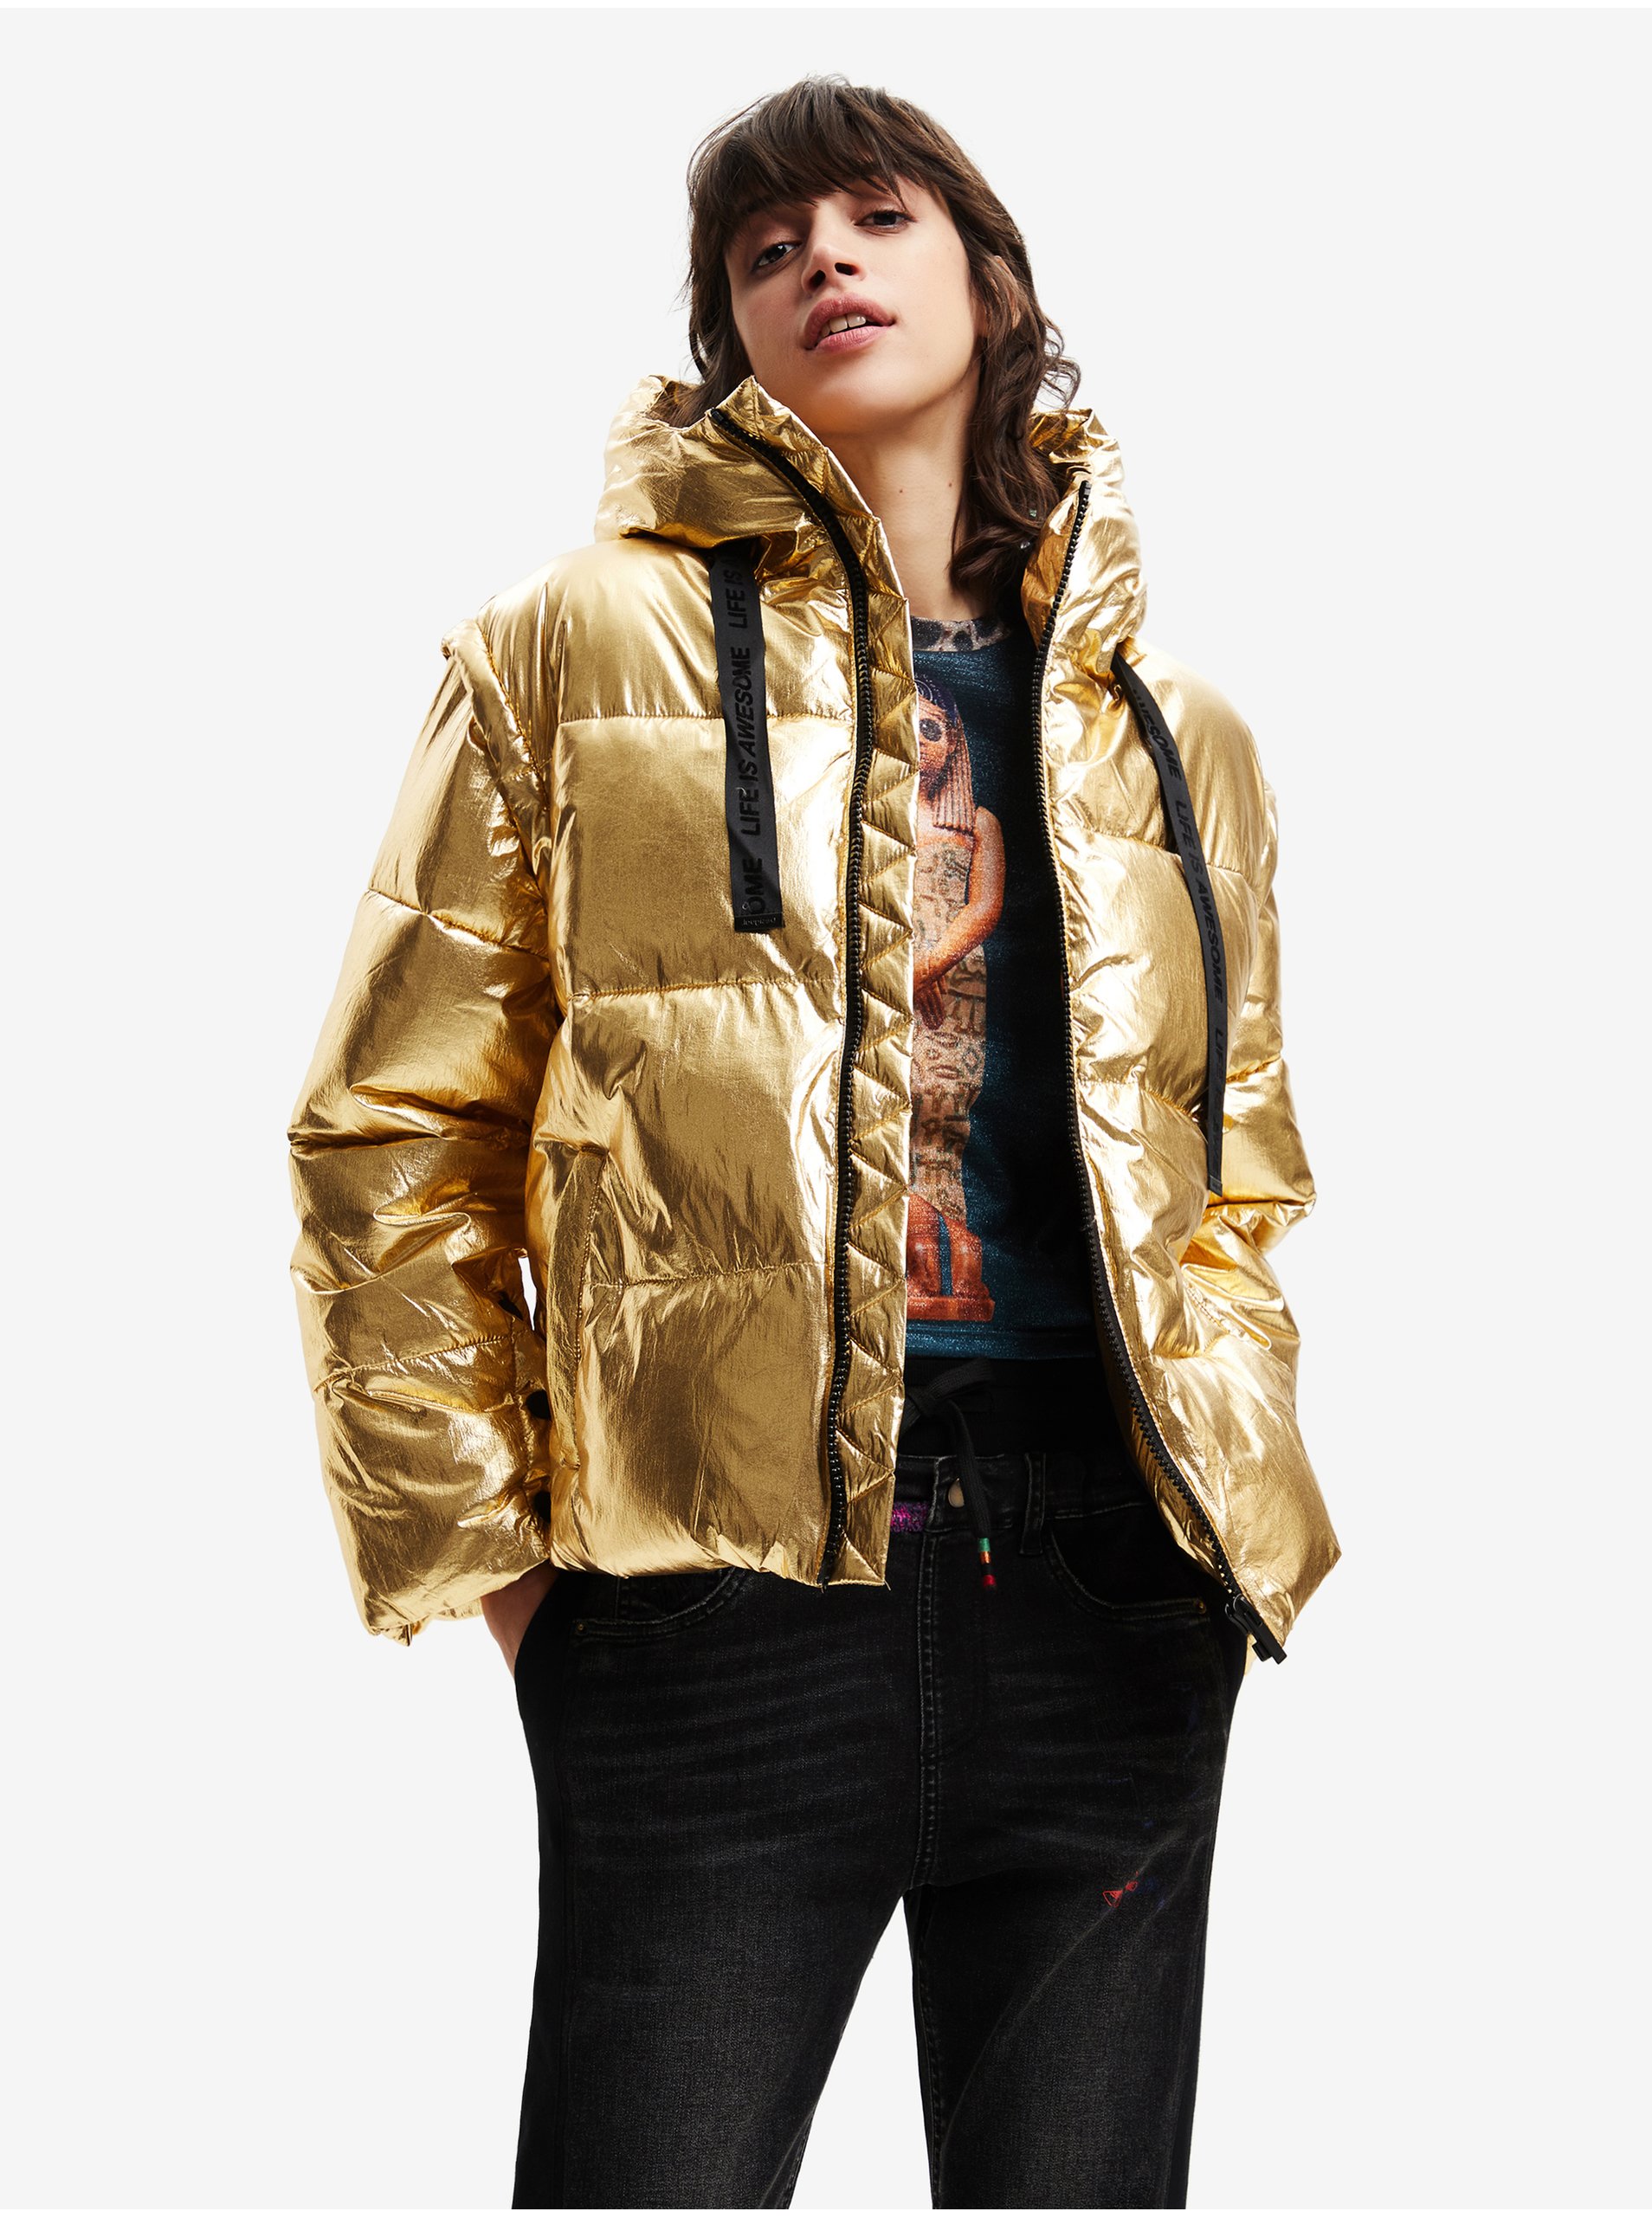 Lacno Dámska prešívaná zimná bunda s kapucňou v zlatej farbe Desigual Jiman